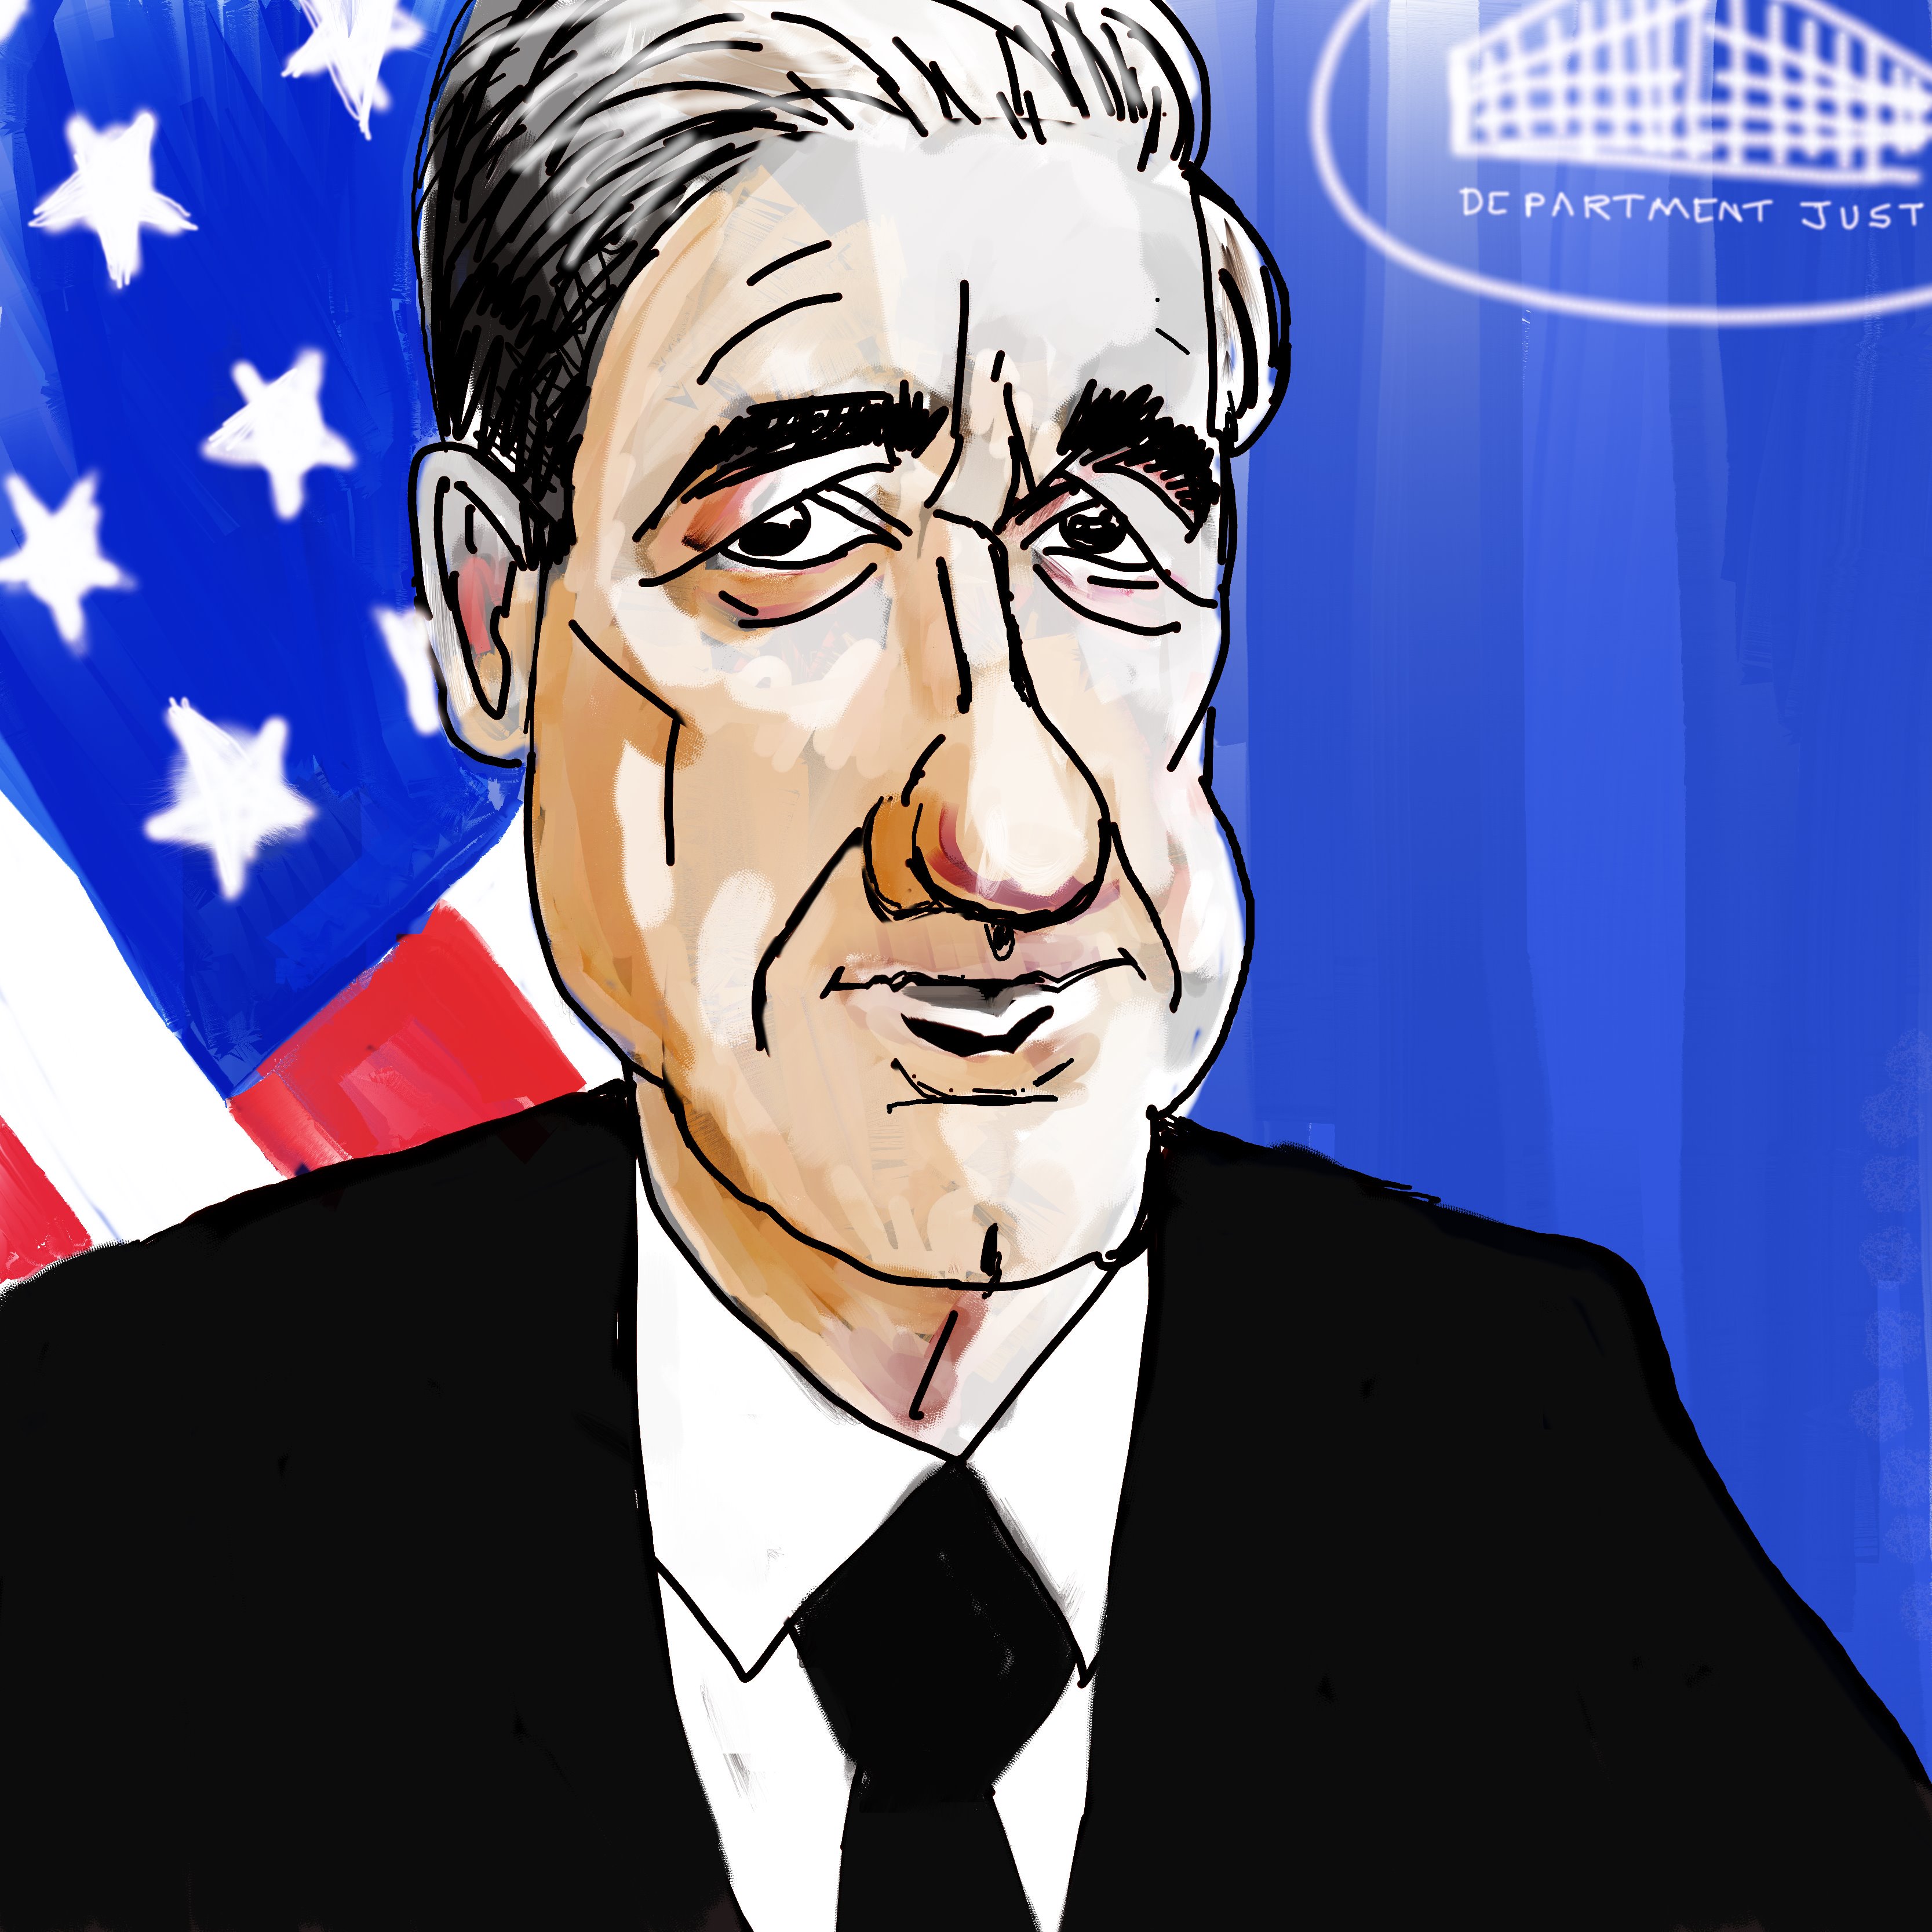 Robert Mueller caricature post thumbnail image